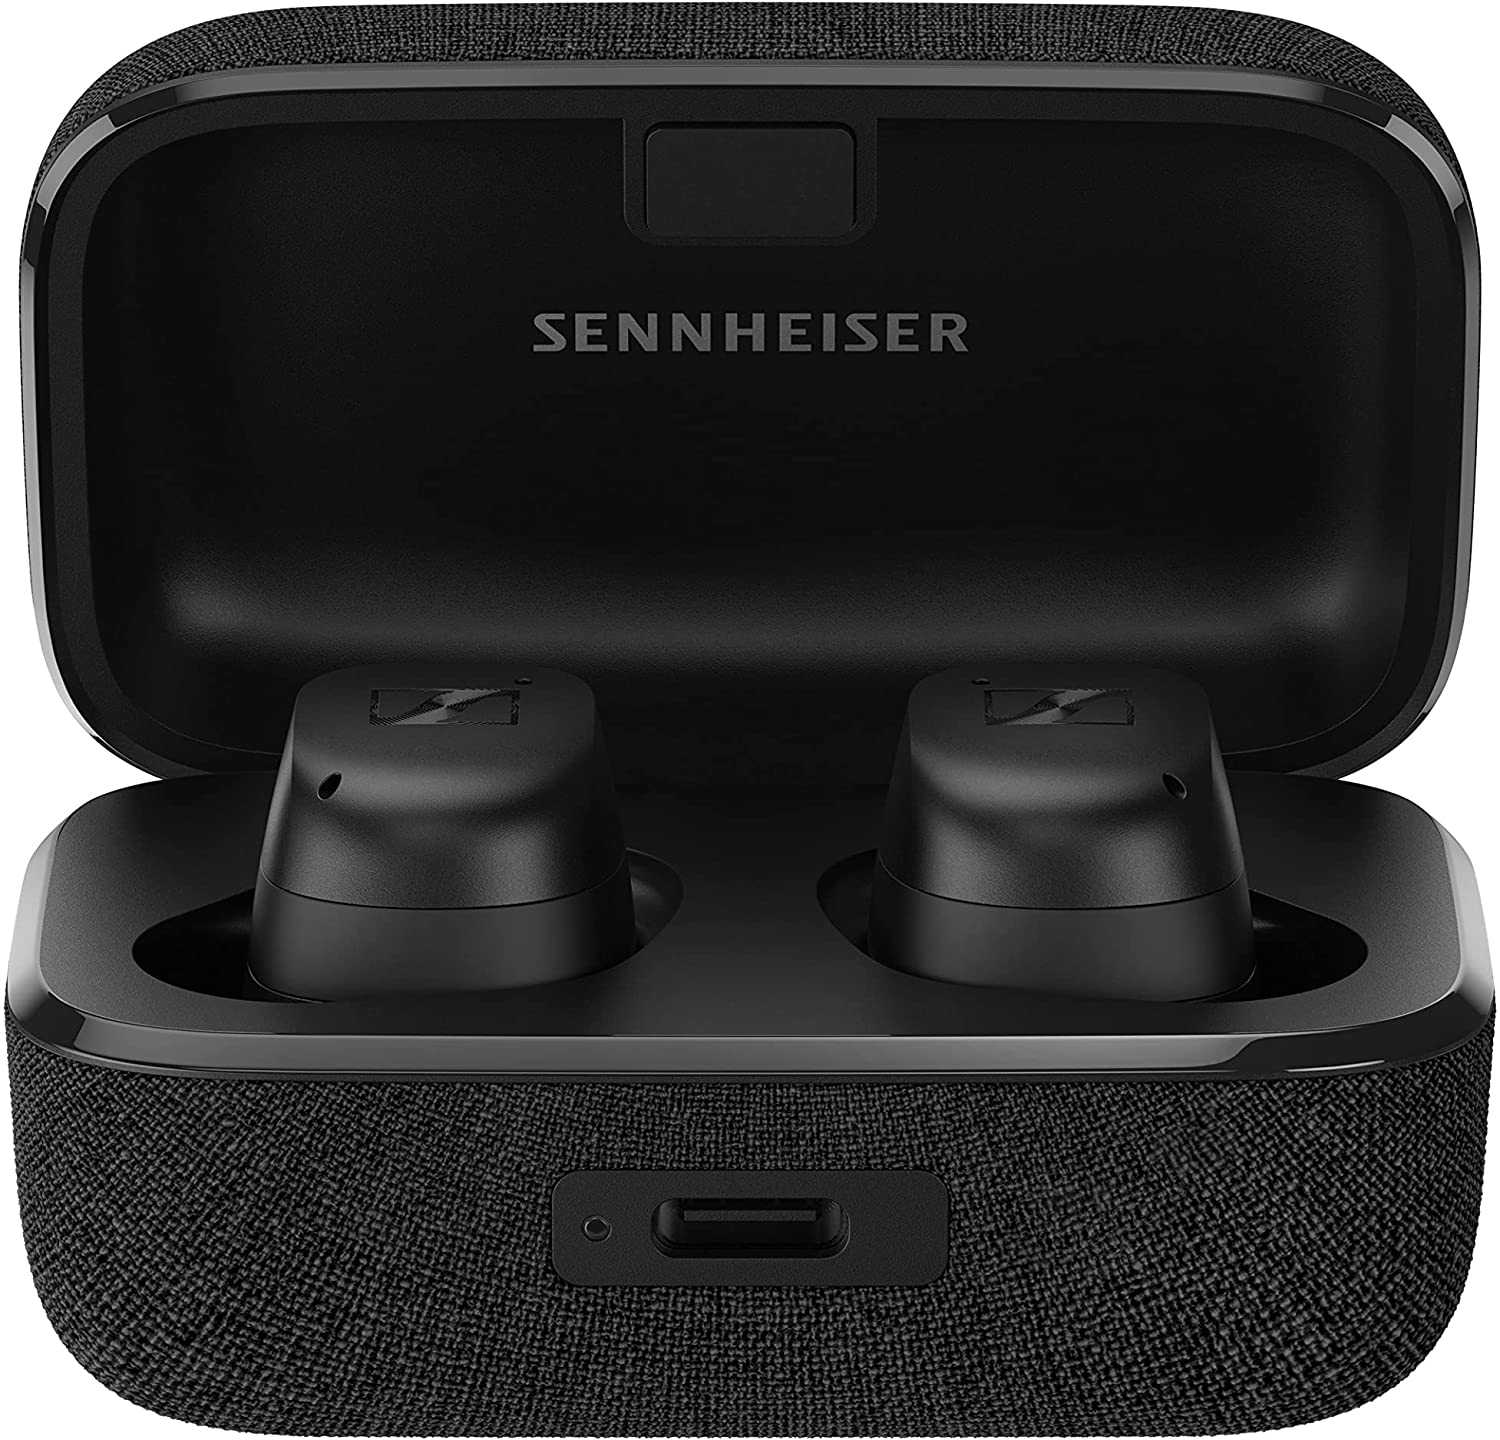 The Sennheiser Momentum 3 wireless buds have a sleeker design, better ANC and a wireless charging case.